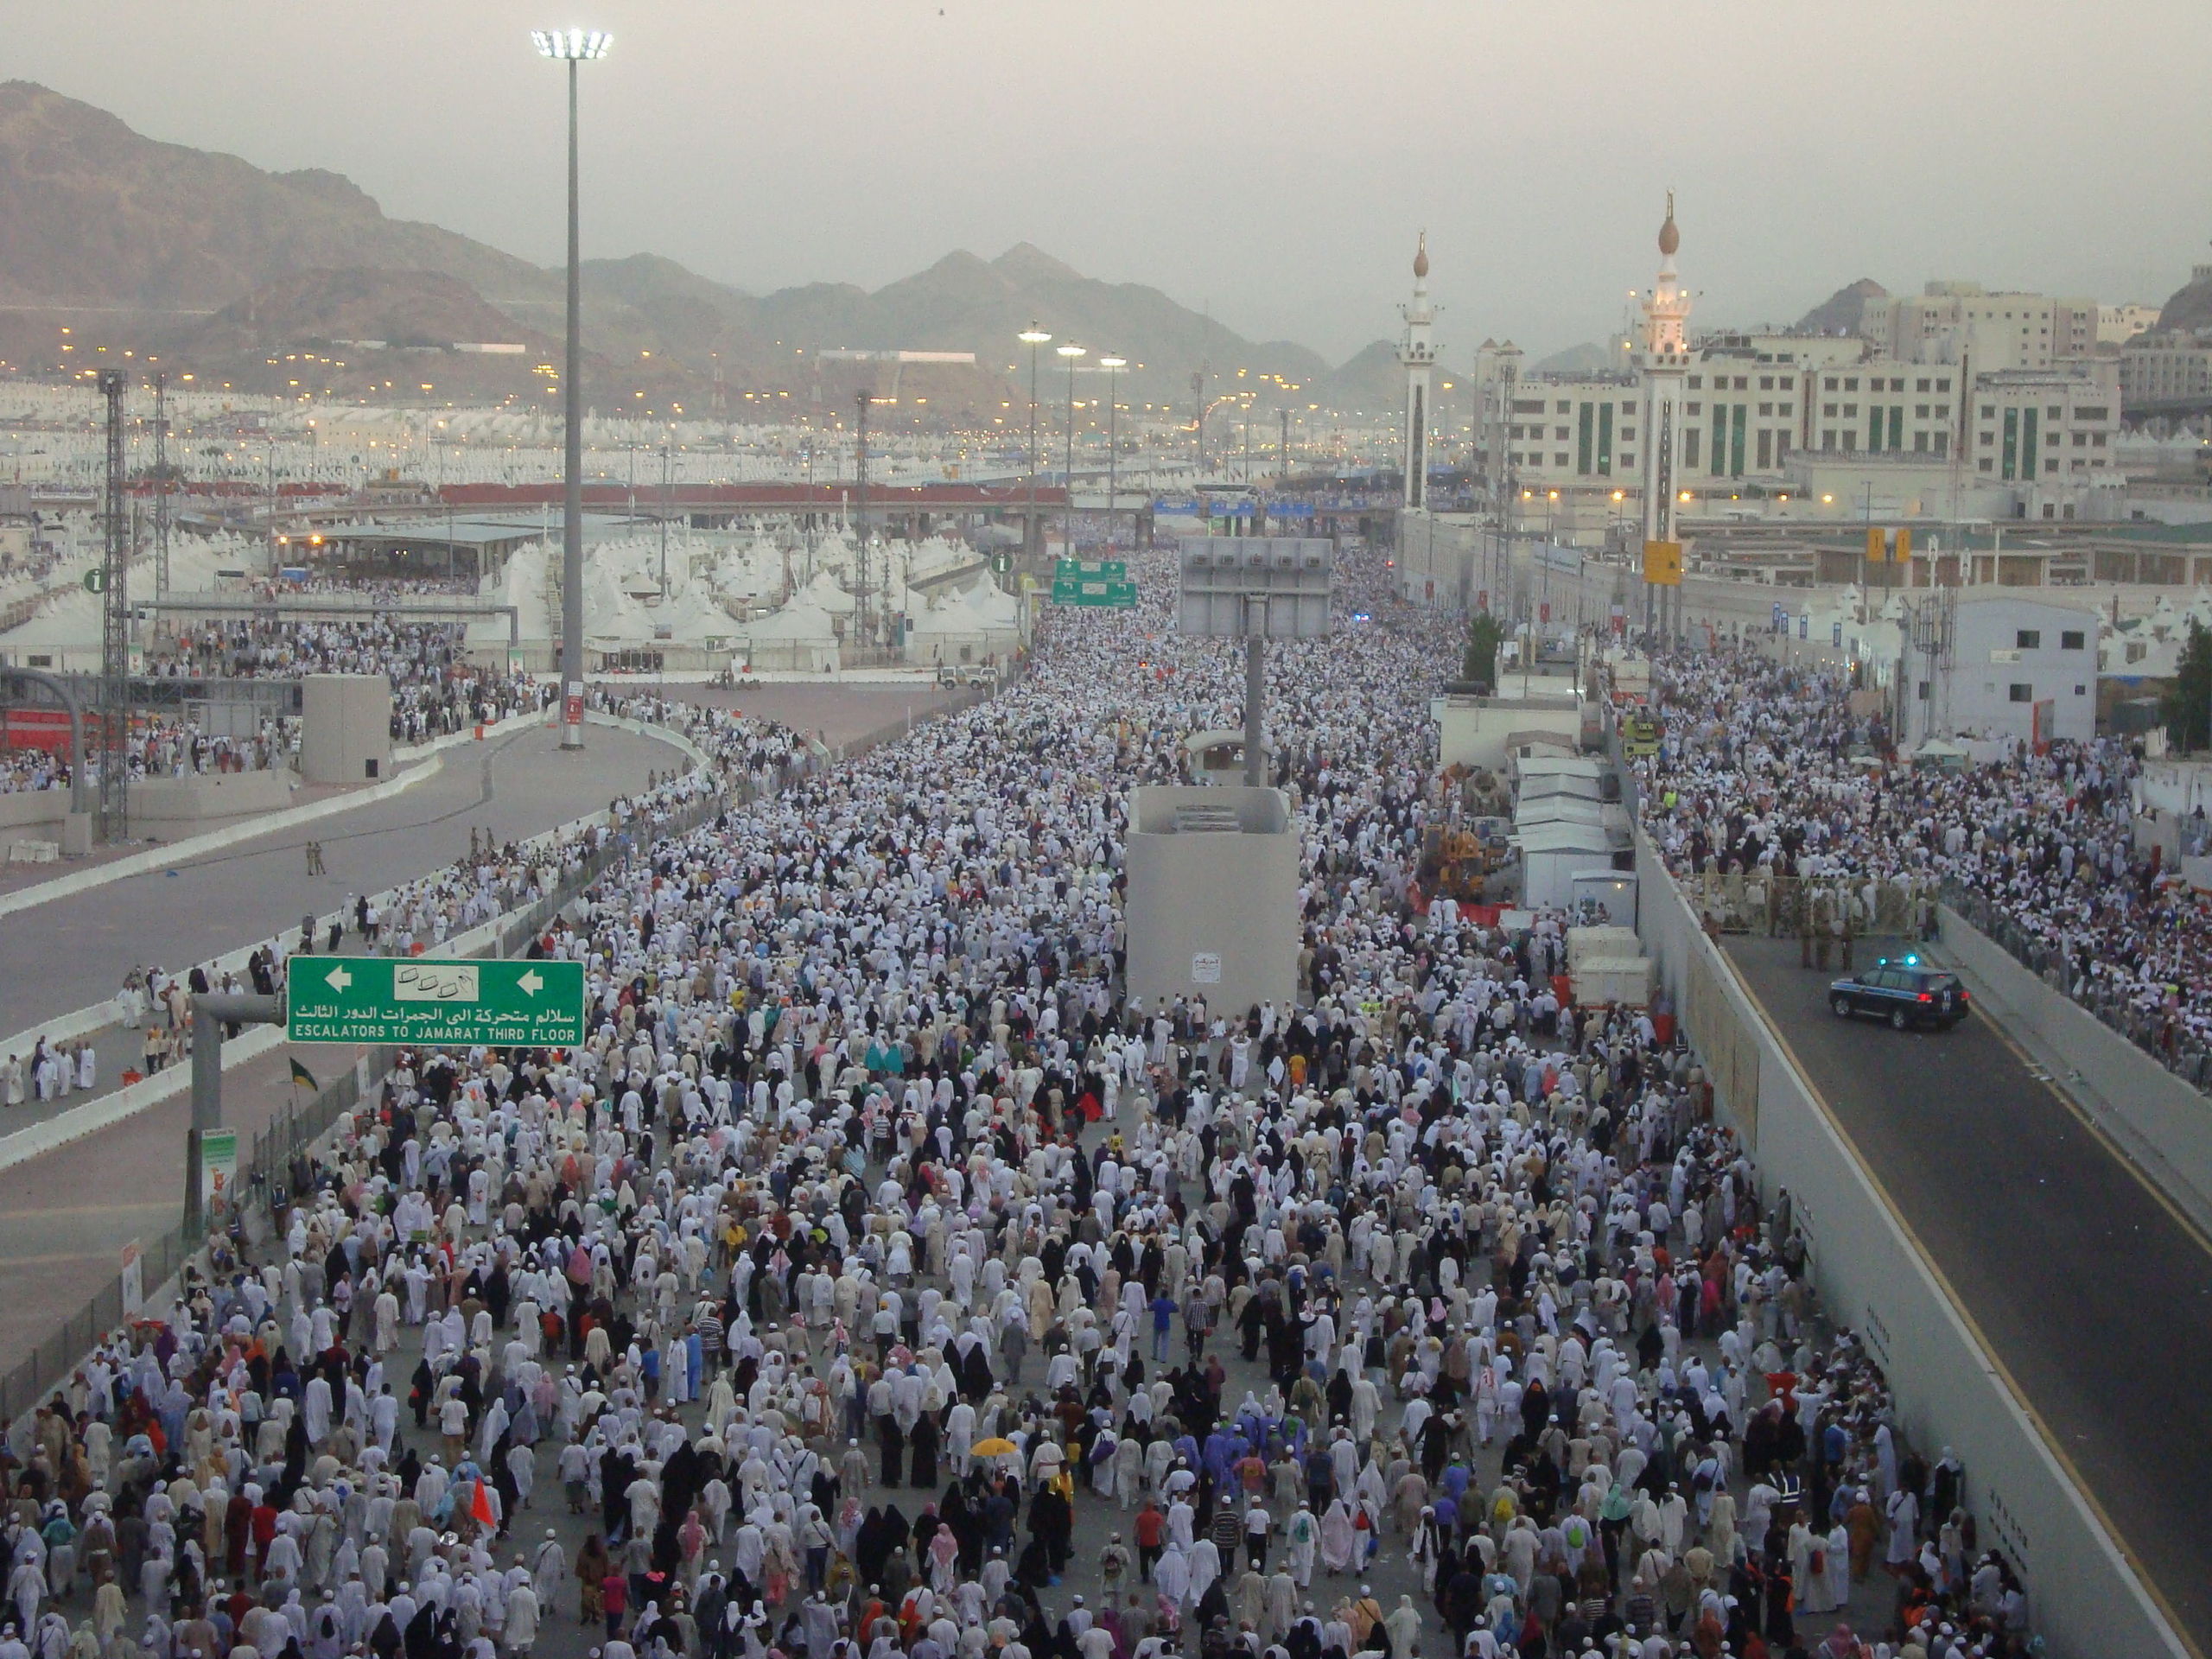 Crowds travel to the Jamarat Bridge during the hajj.